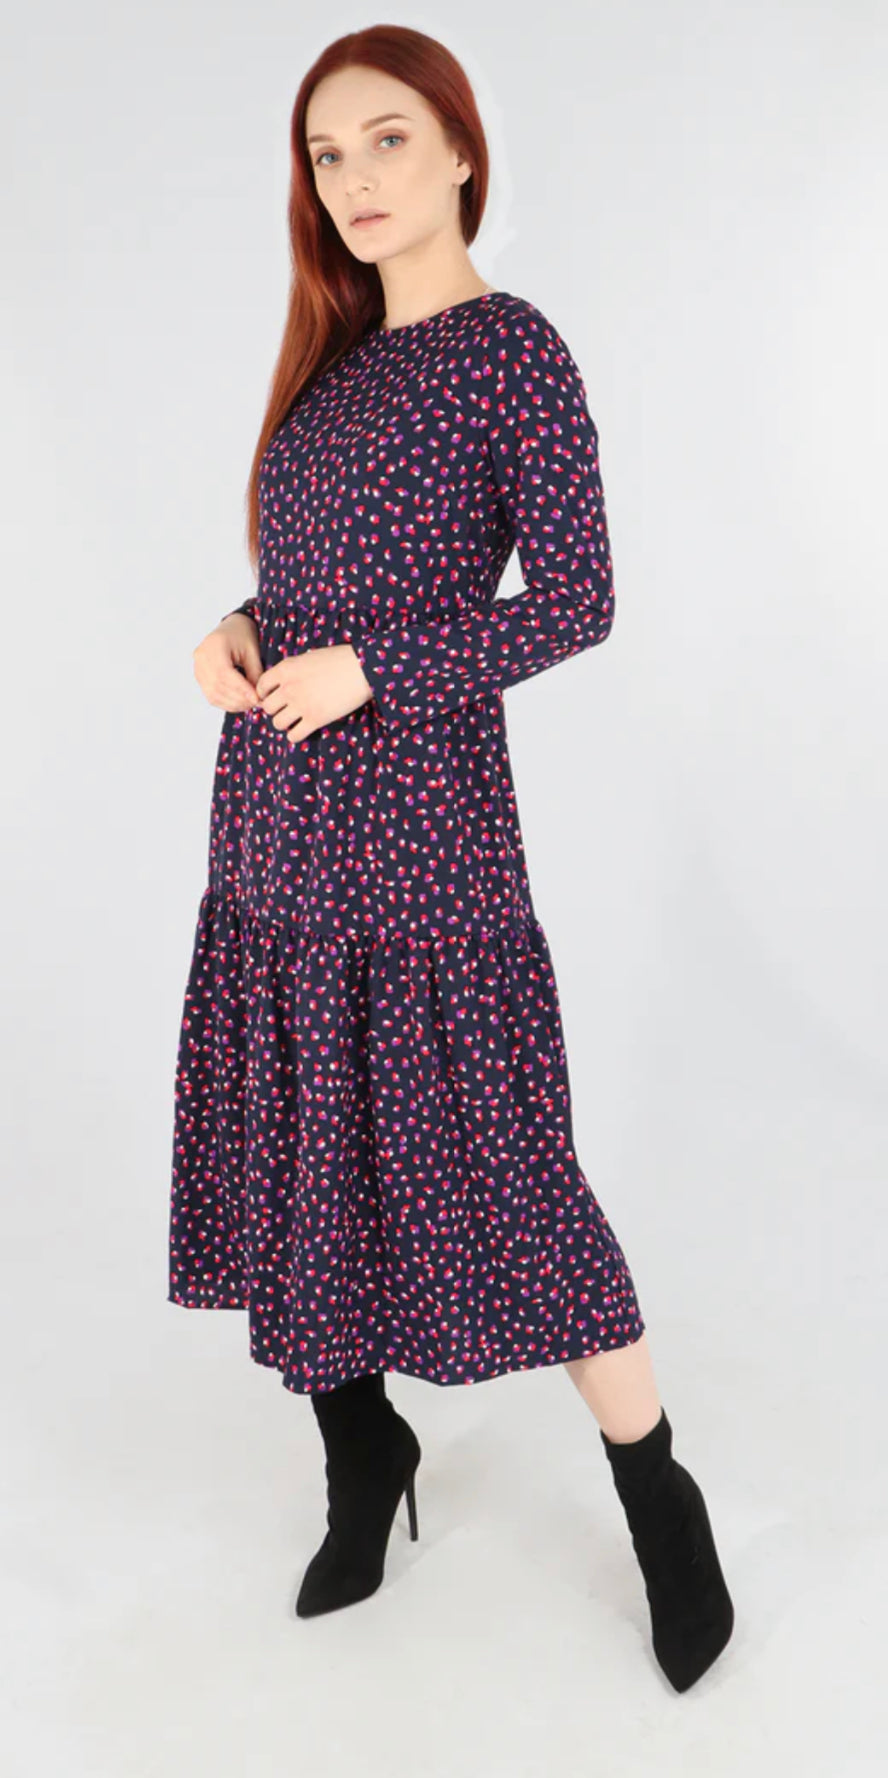 Smudge Leopard Print Tiered Dress - Navy/Pink